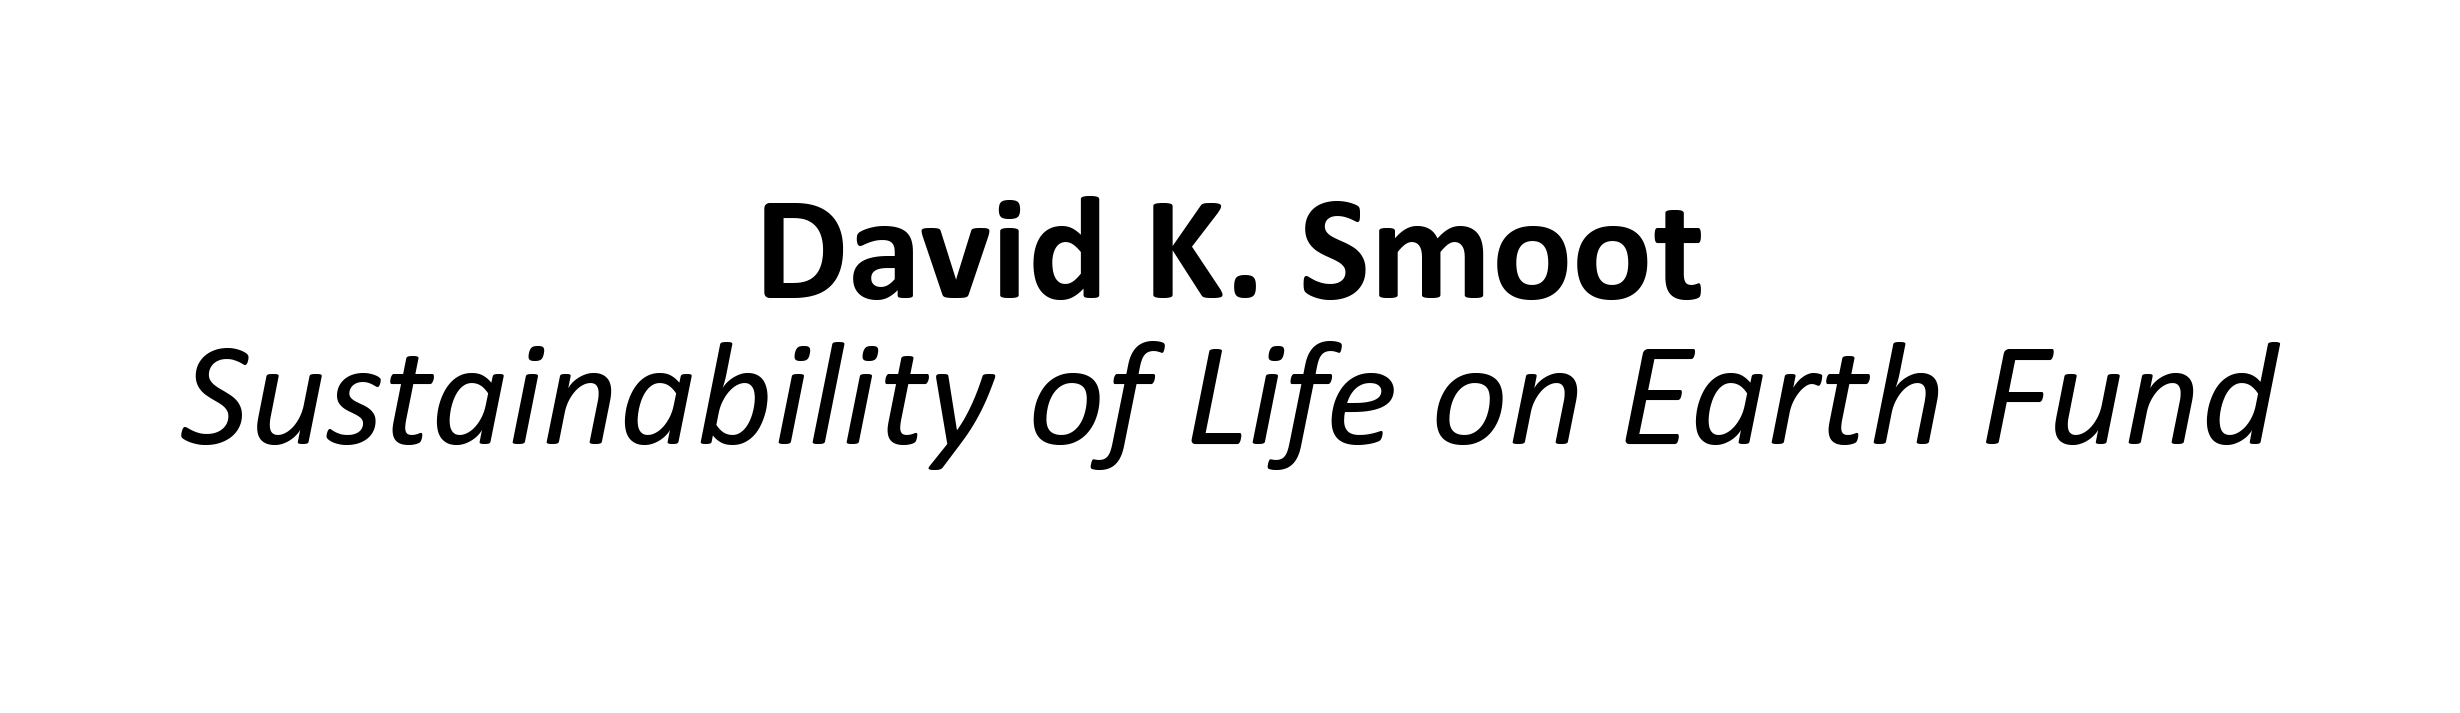 David K. Smoot Sustainability of Life on Earth Foundation